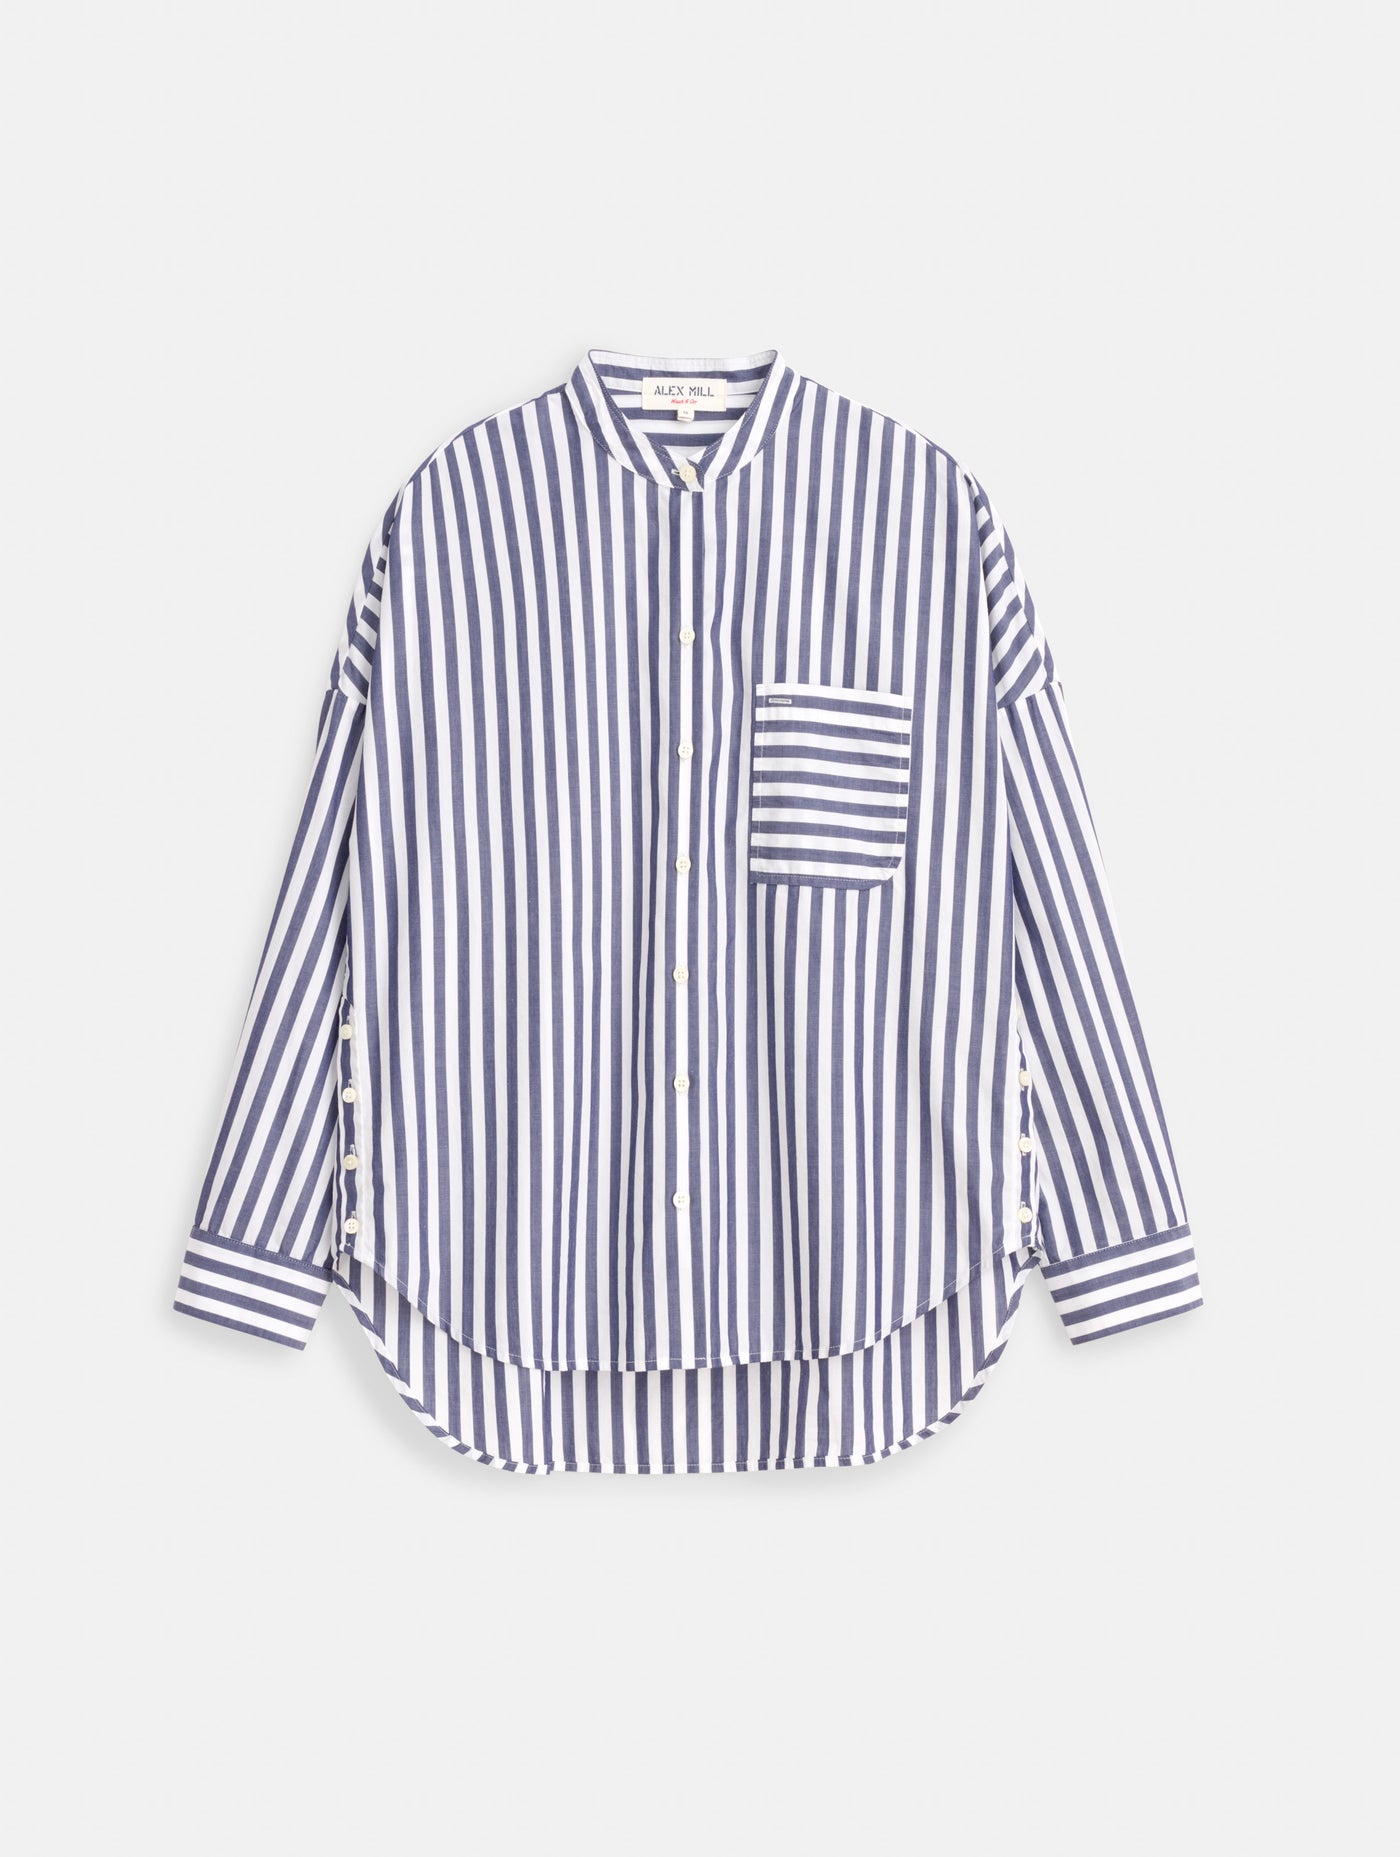 Jo Striped Shirt in Cotton